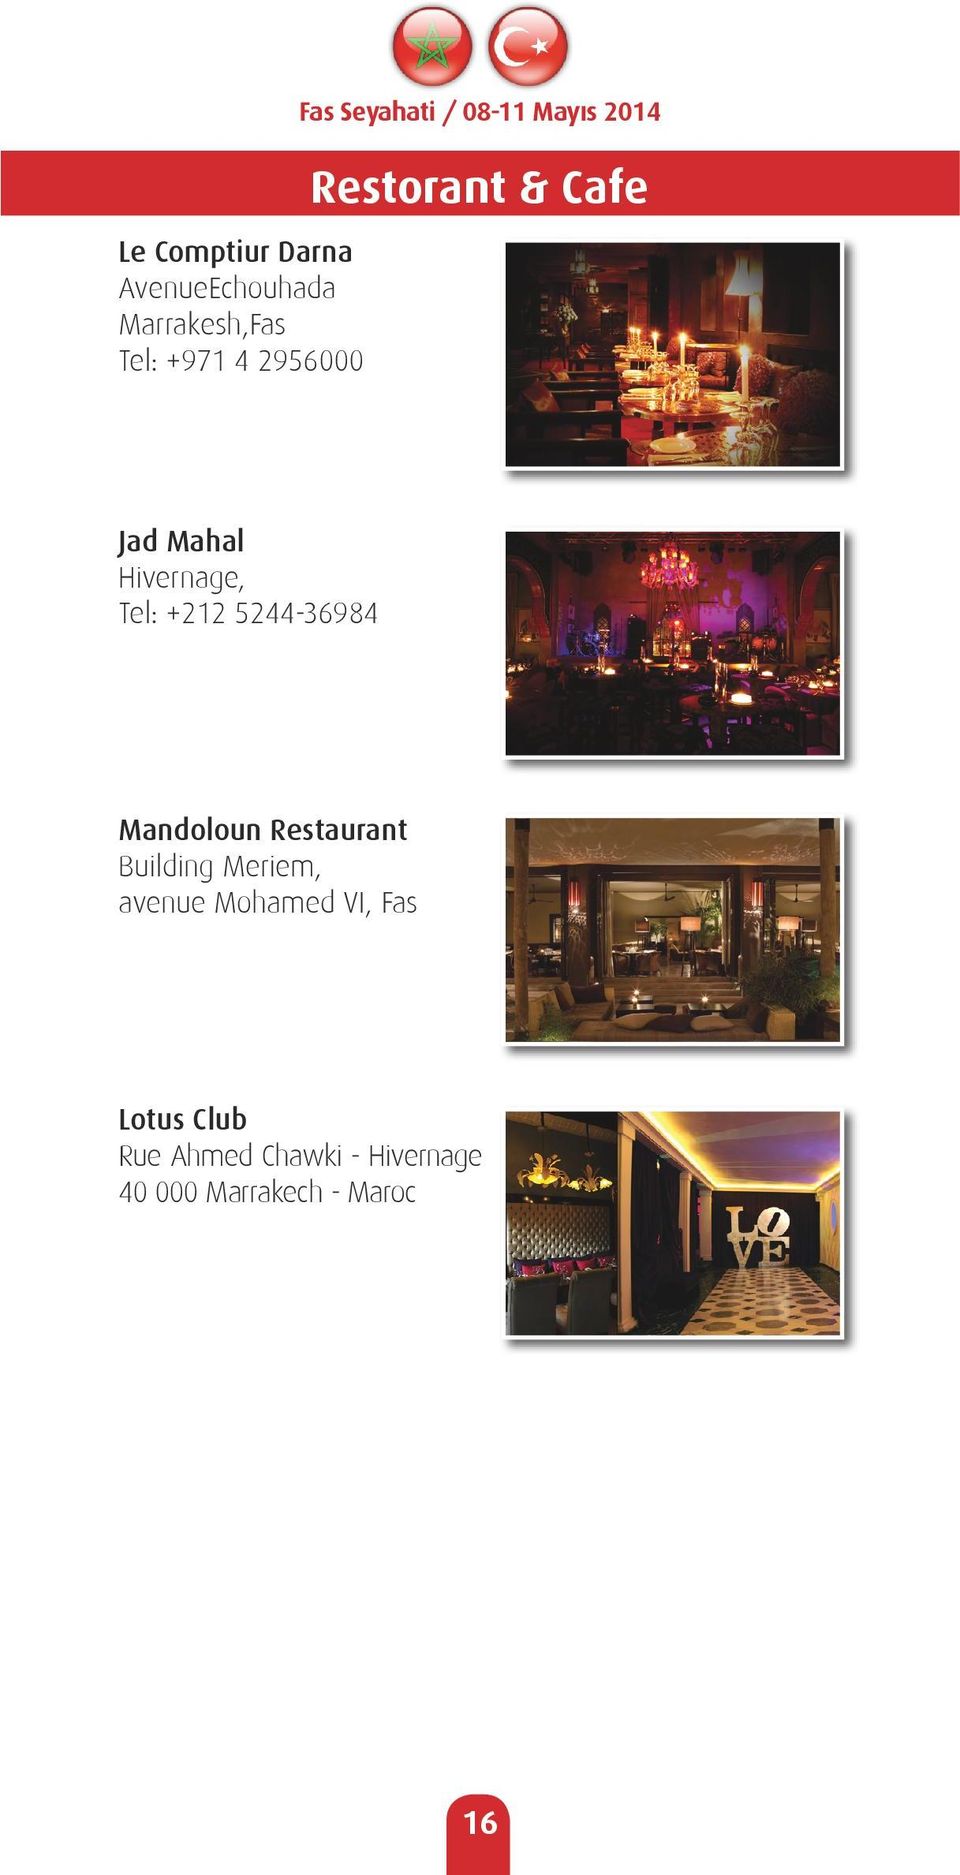 +212 5244-36984 Mandoloun Restaurant Building Meriem, avenue Mohamed